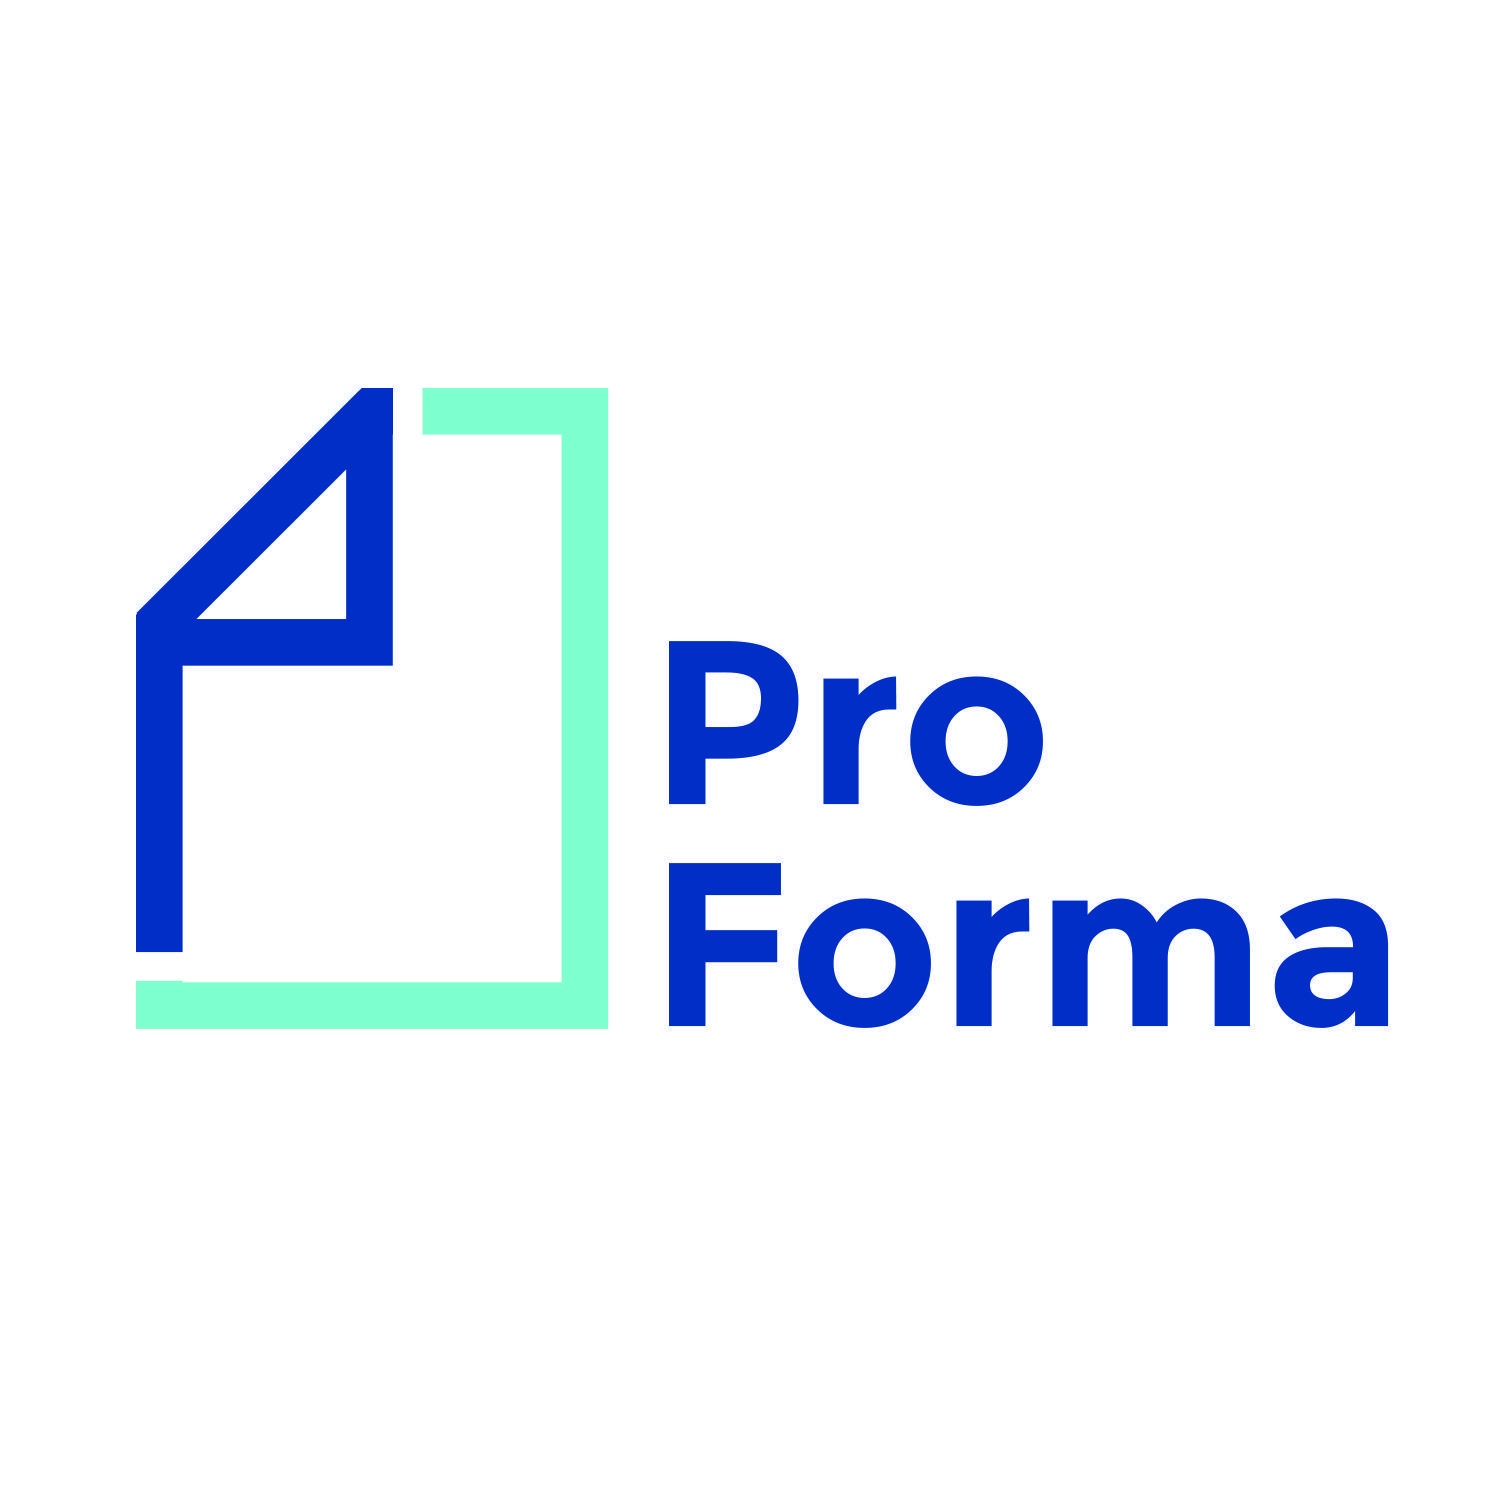 CEB Logo - Modern, Professional, Startup Logo Design for Pro Forma